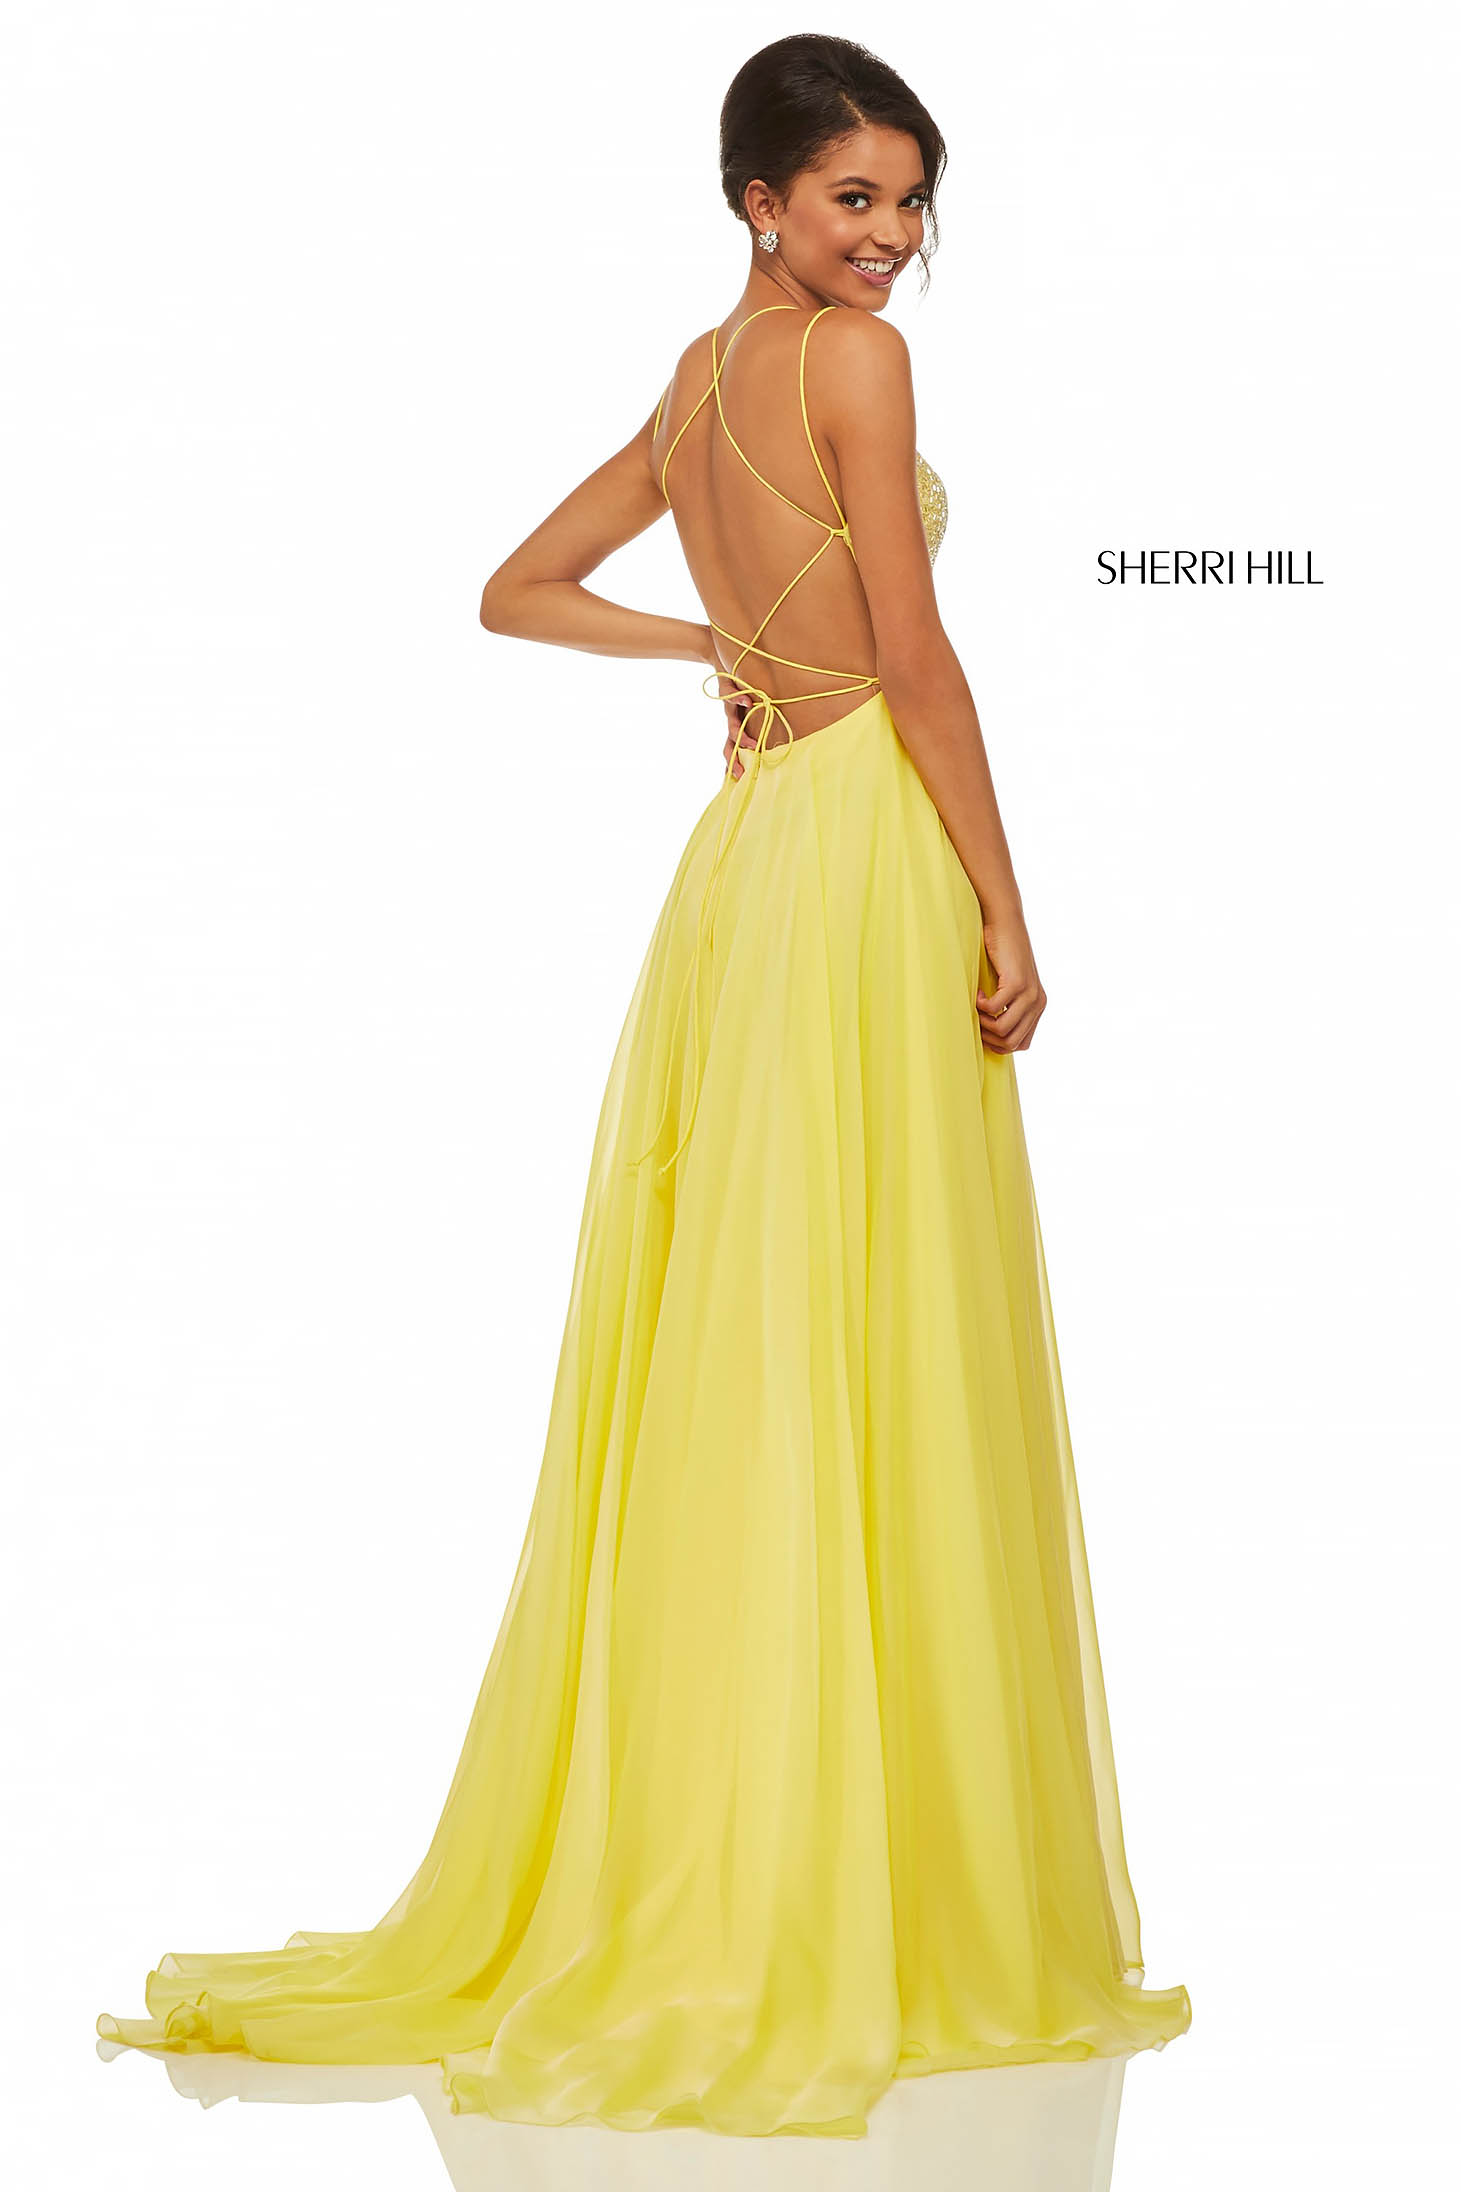 Sherri Hill 52591 Yellow Dress